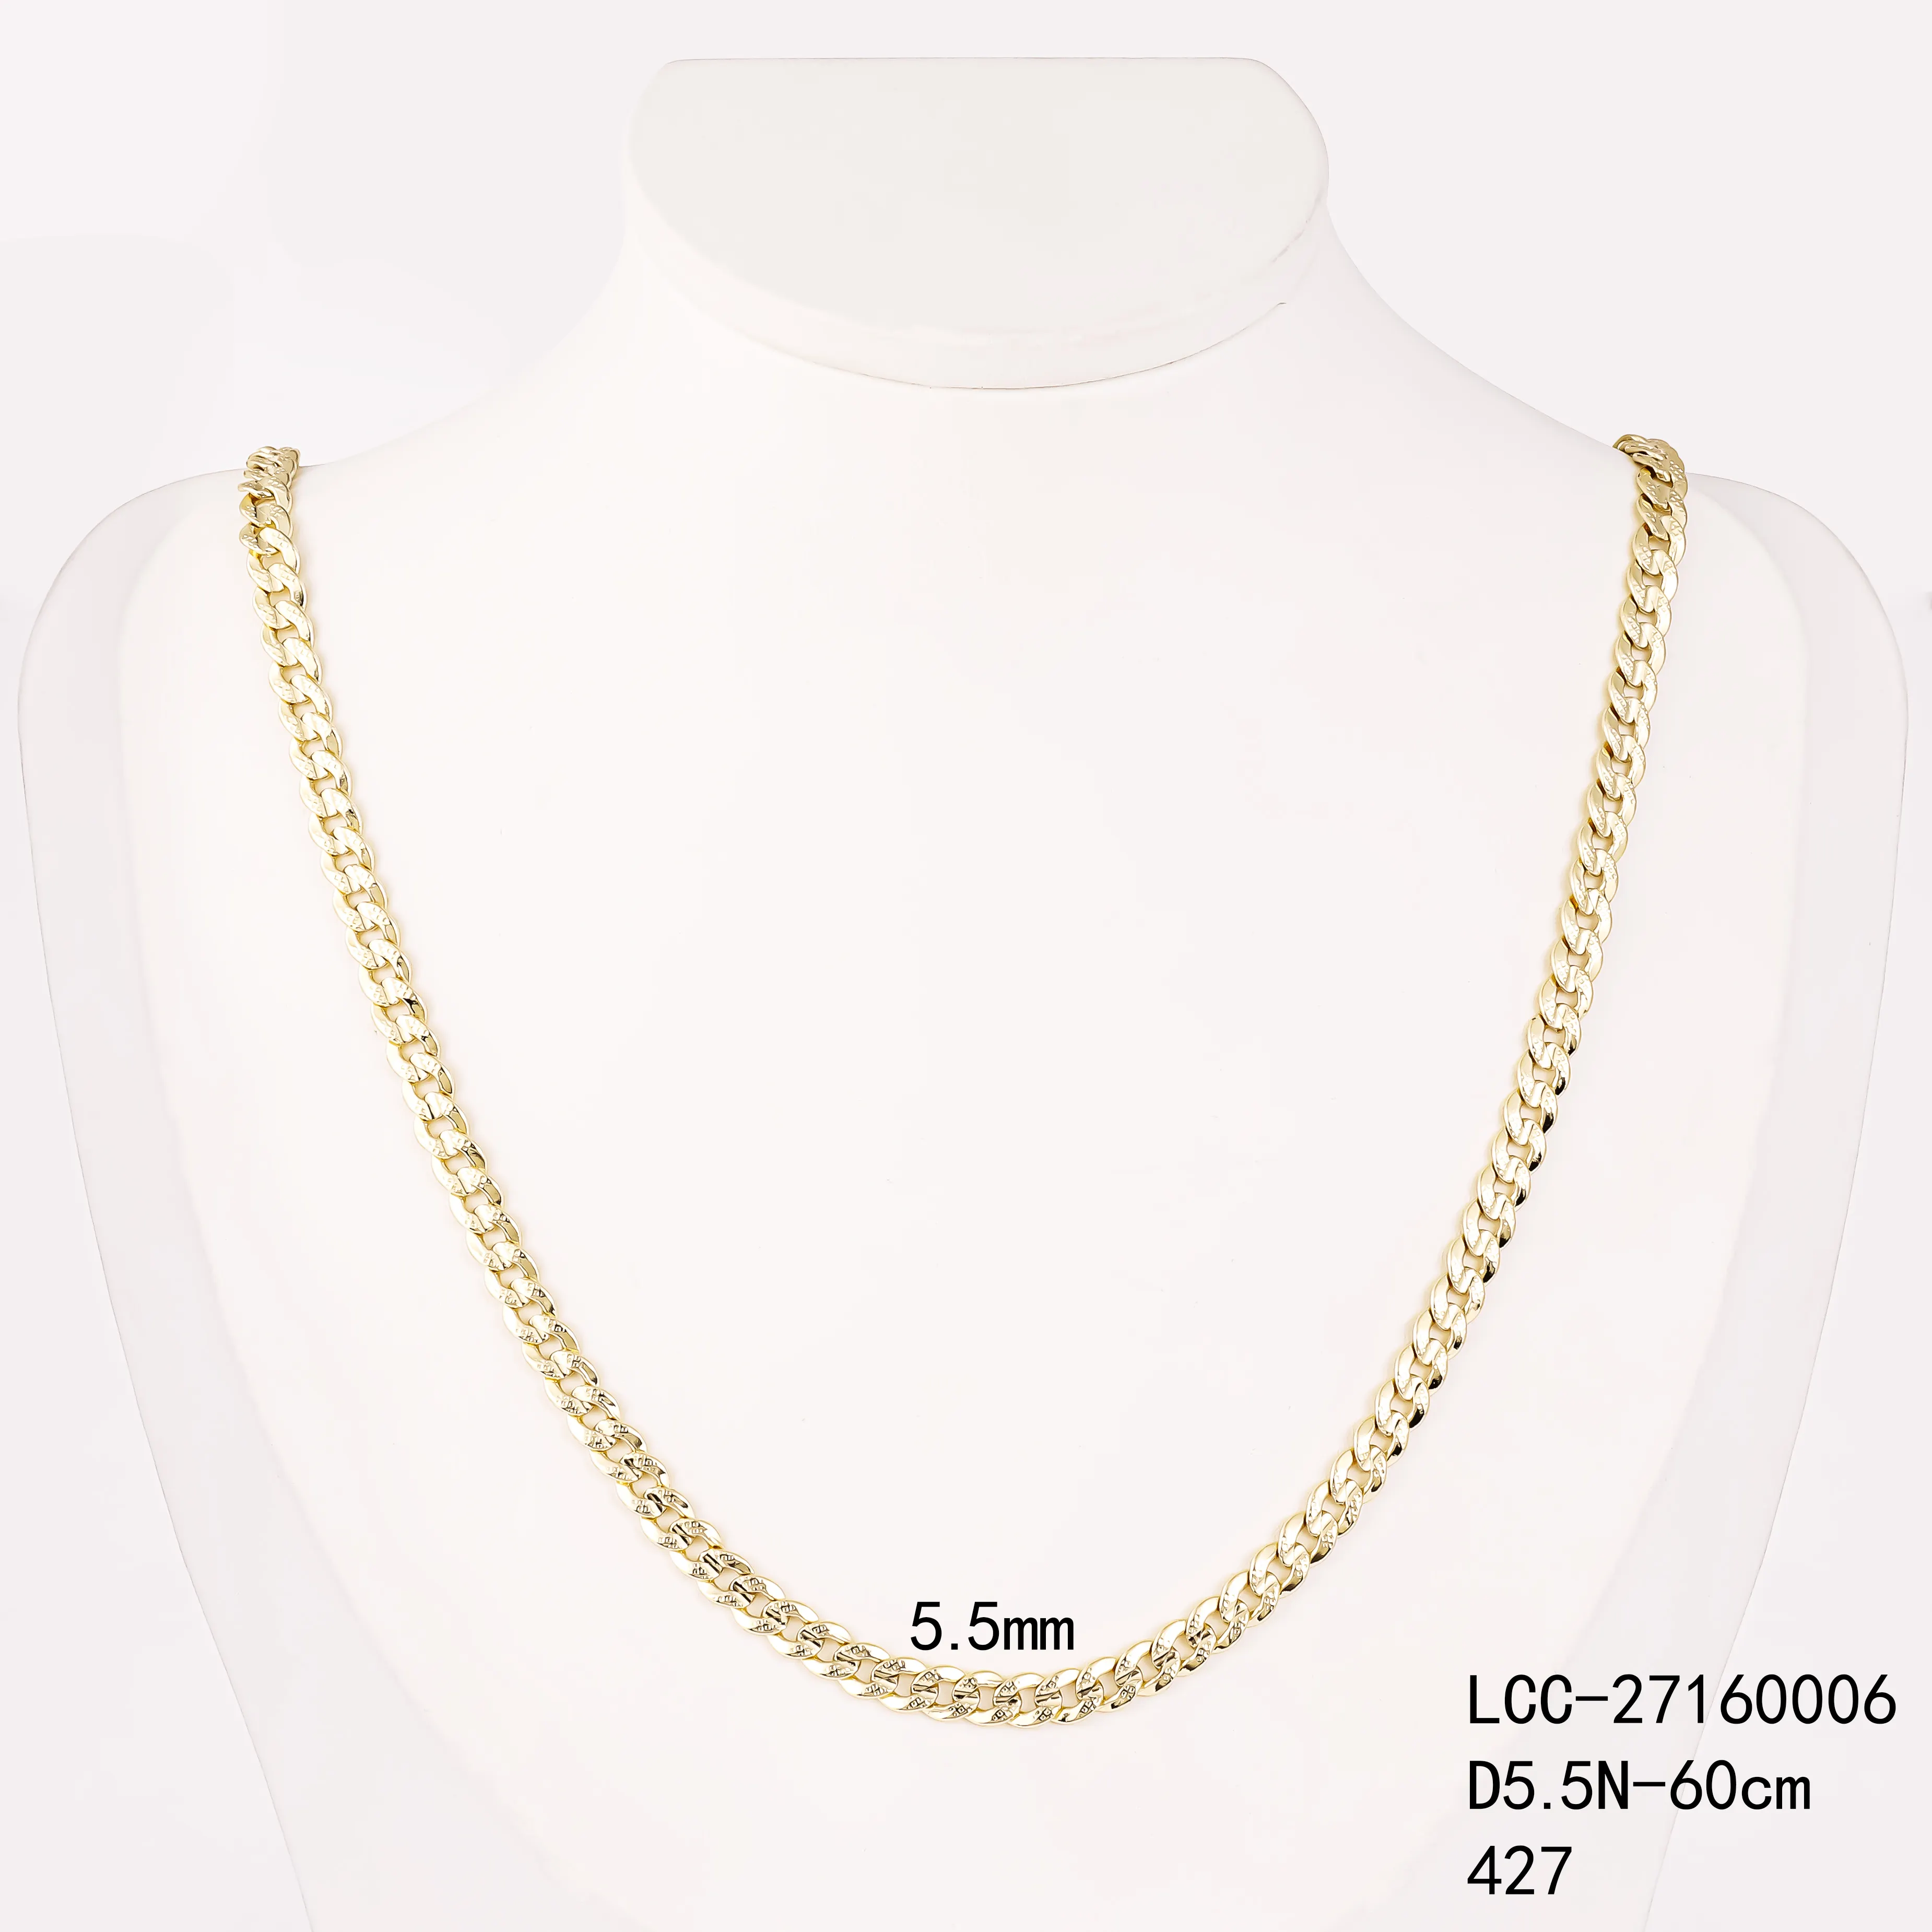 Fashion jewelry 14K read gold filled plated hip hop necklace cadenas cubana de oro Franco Miami diamond cut cuban link men chain